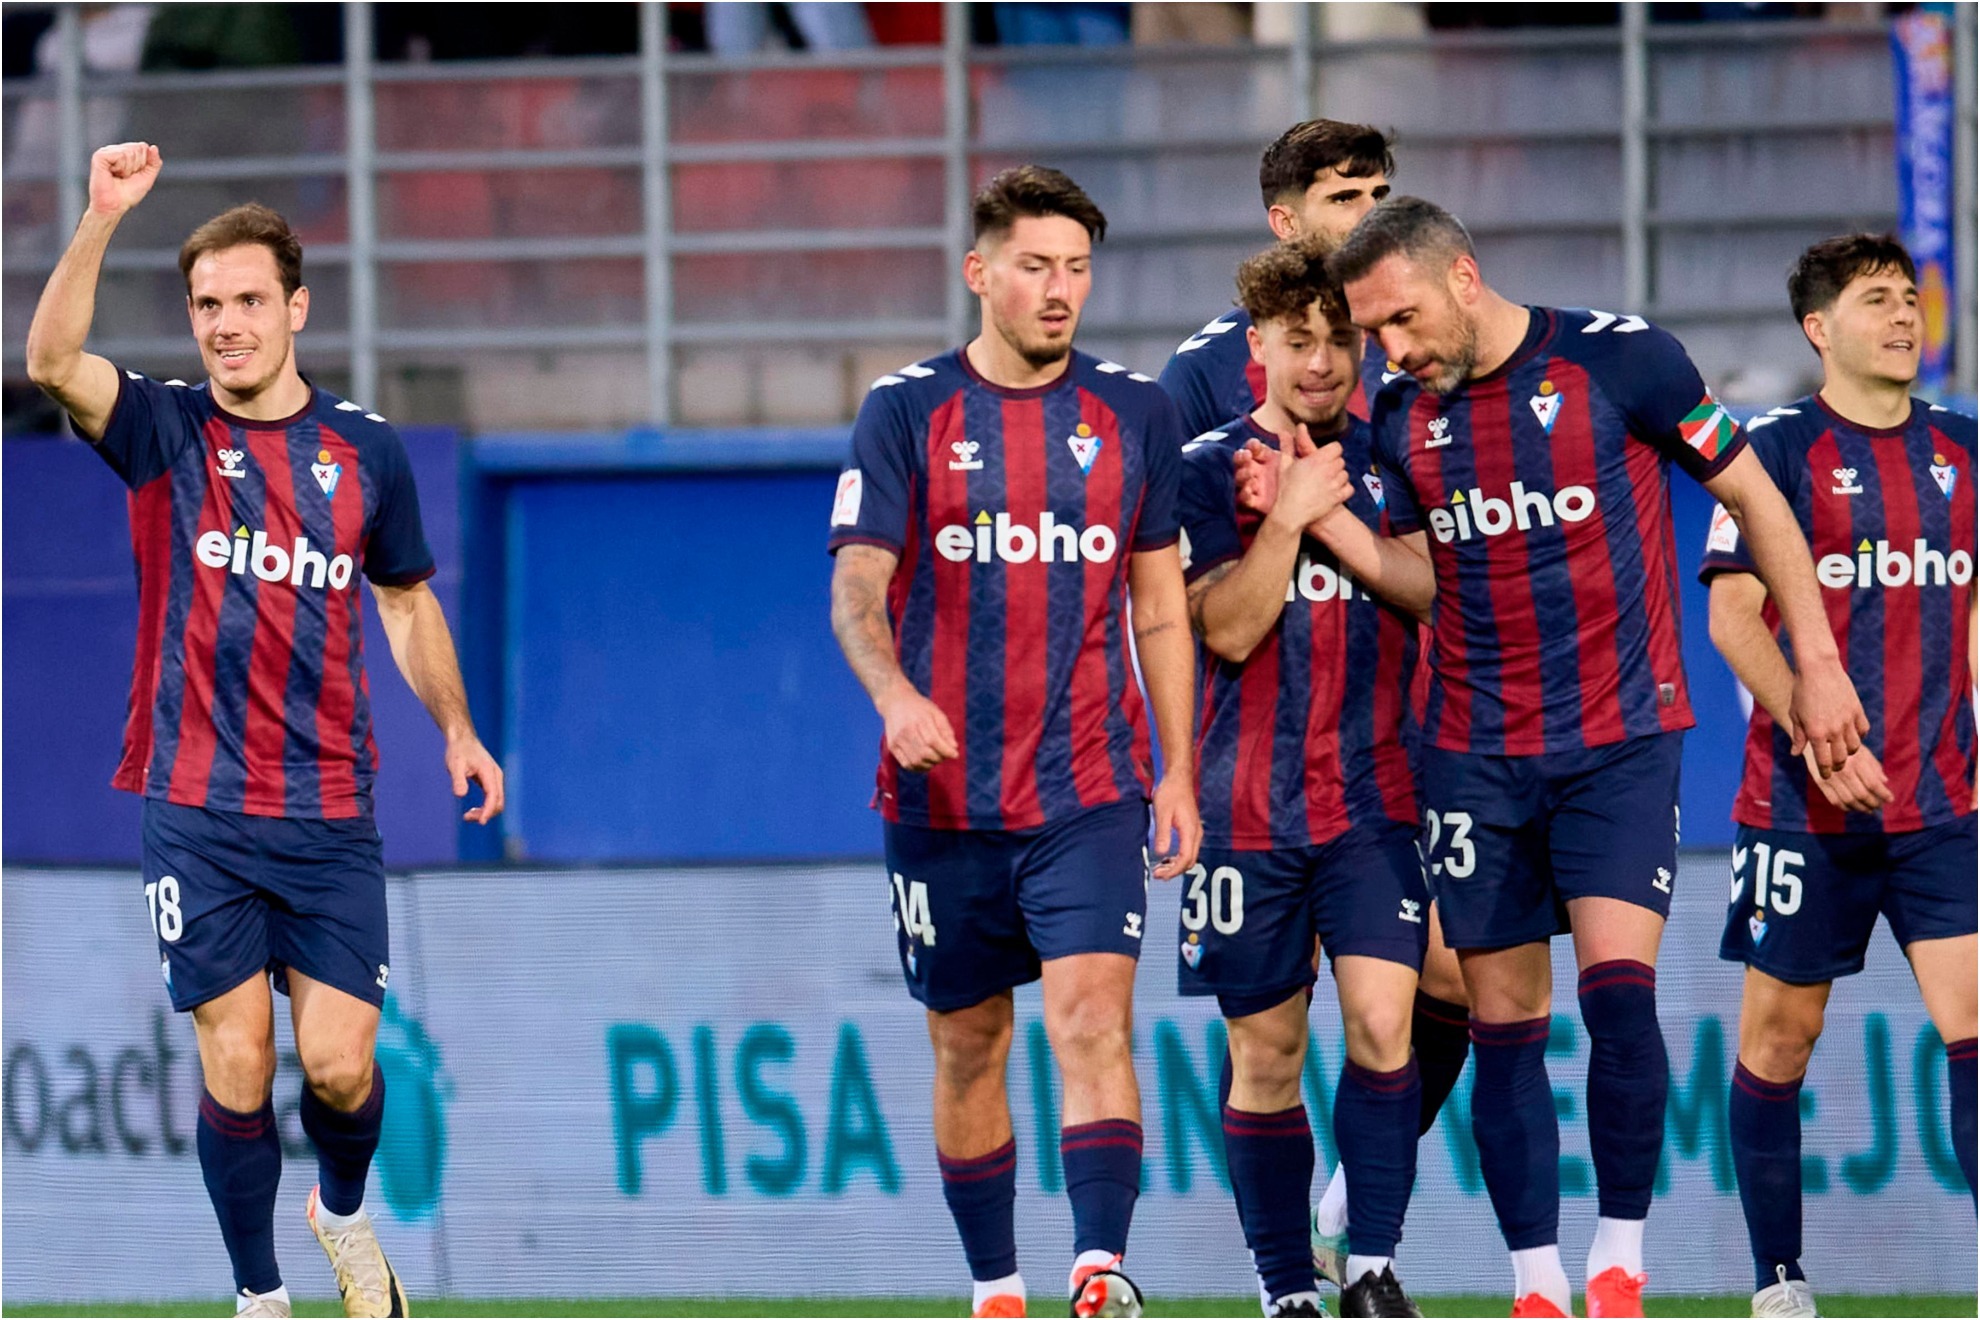 Los jugadores del Eibar celebran el gol al Zaragoza en Ipurua